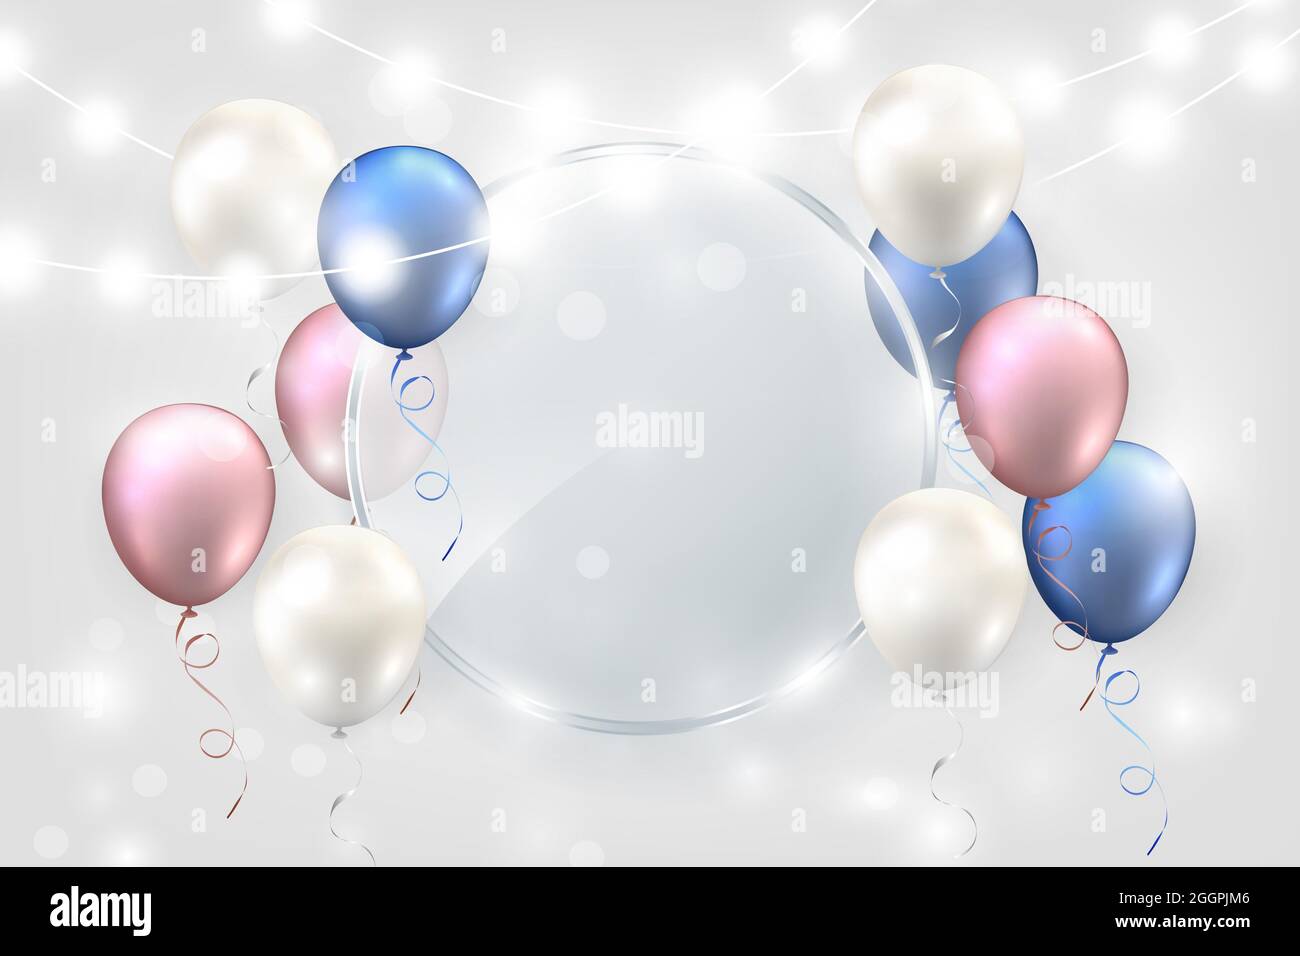 Elegant blue purple pink white ballon and decorative lighting chains round  transparent glass plate Happy Birthday celebration card banner template  Stock Photo - Alamy